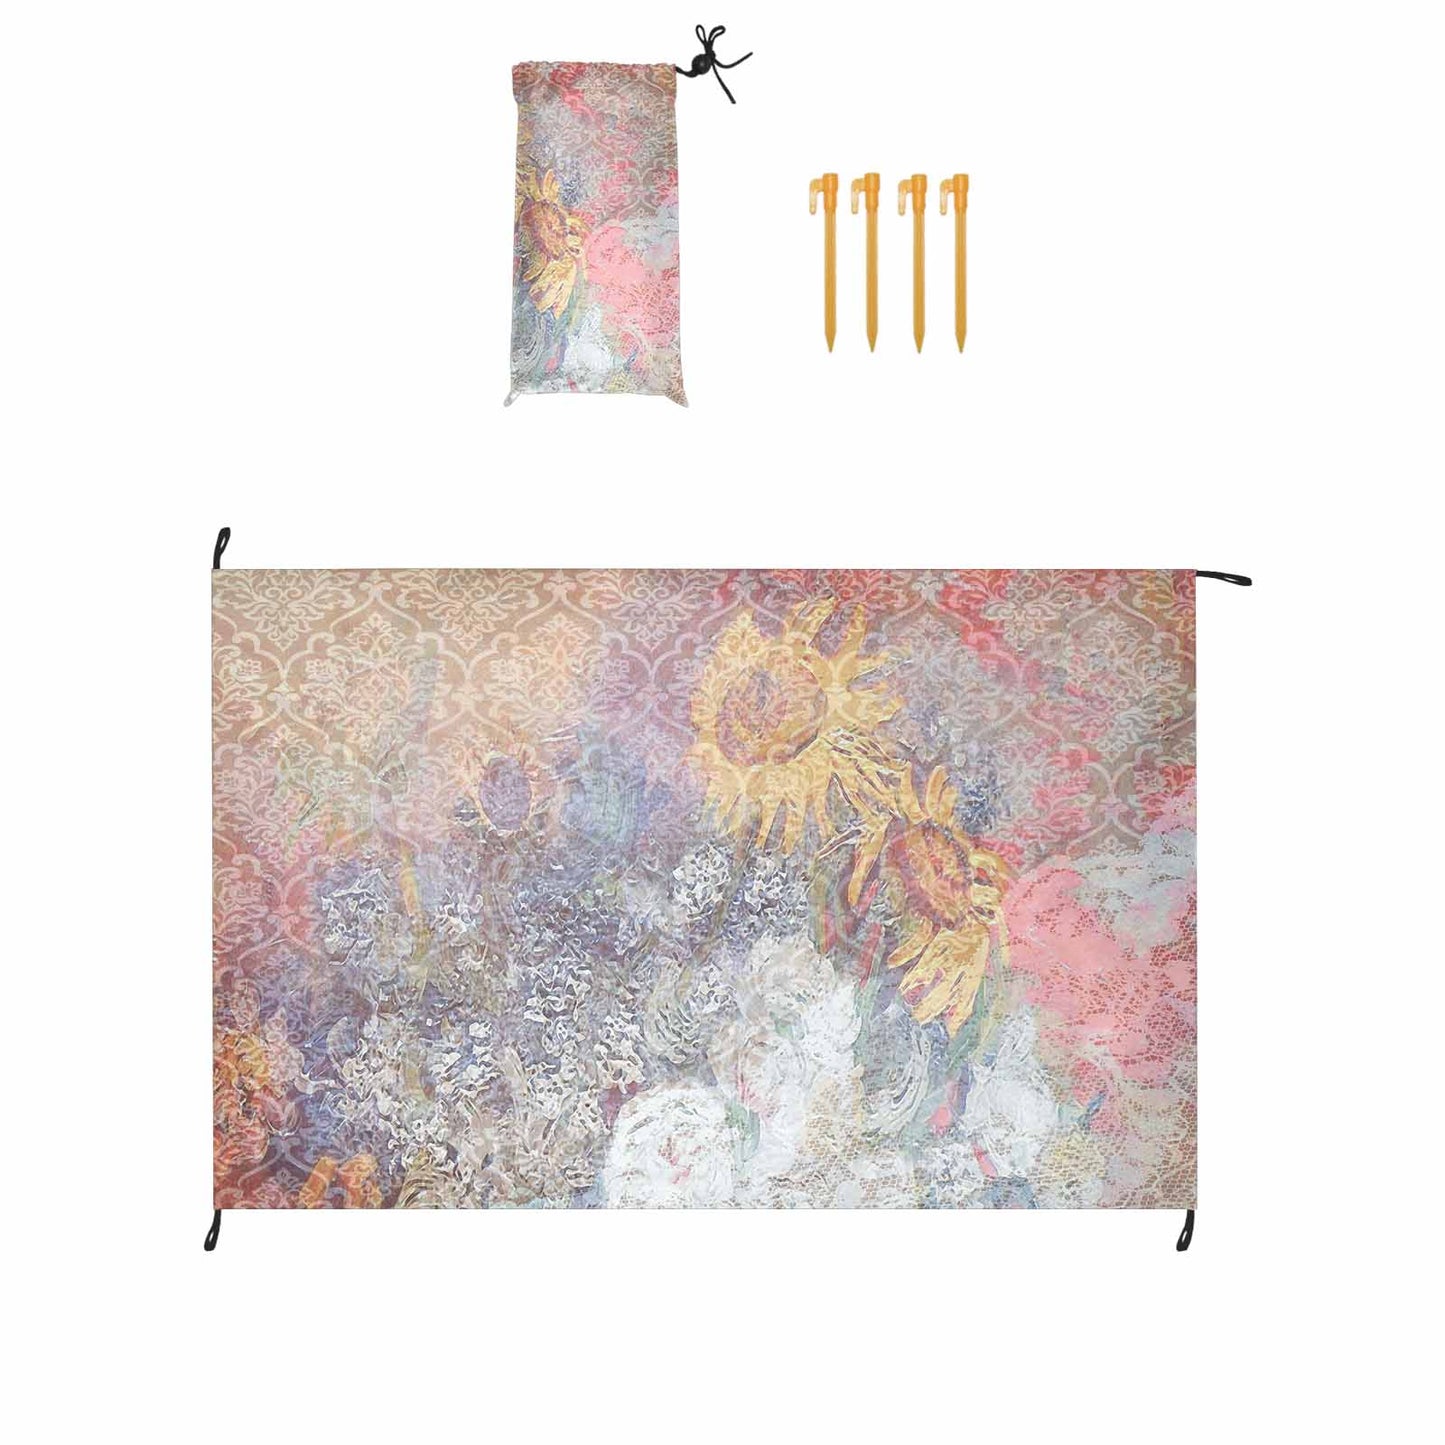 Vintage Floral waterproof picnic mat, 81 x 55in, Design 54x